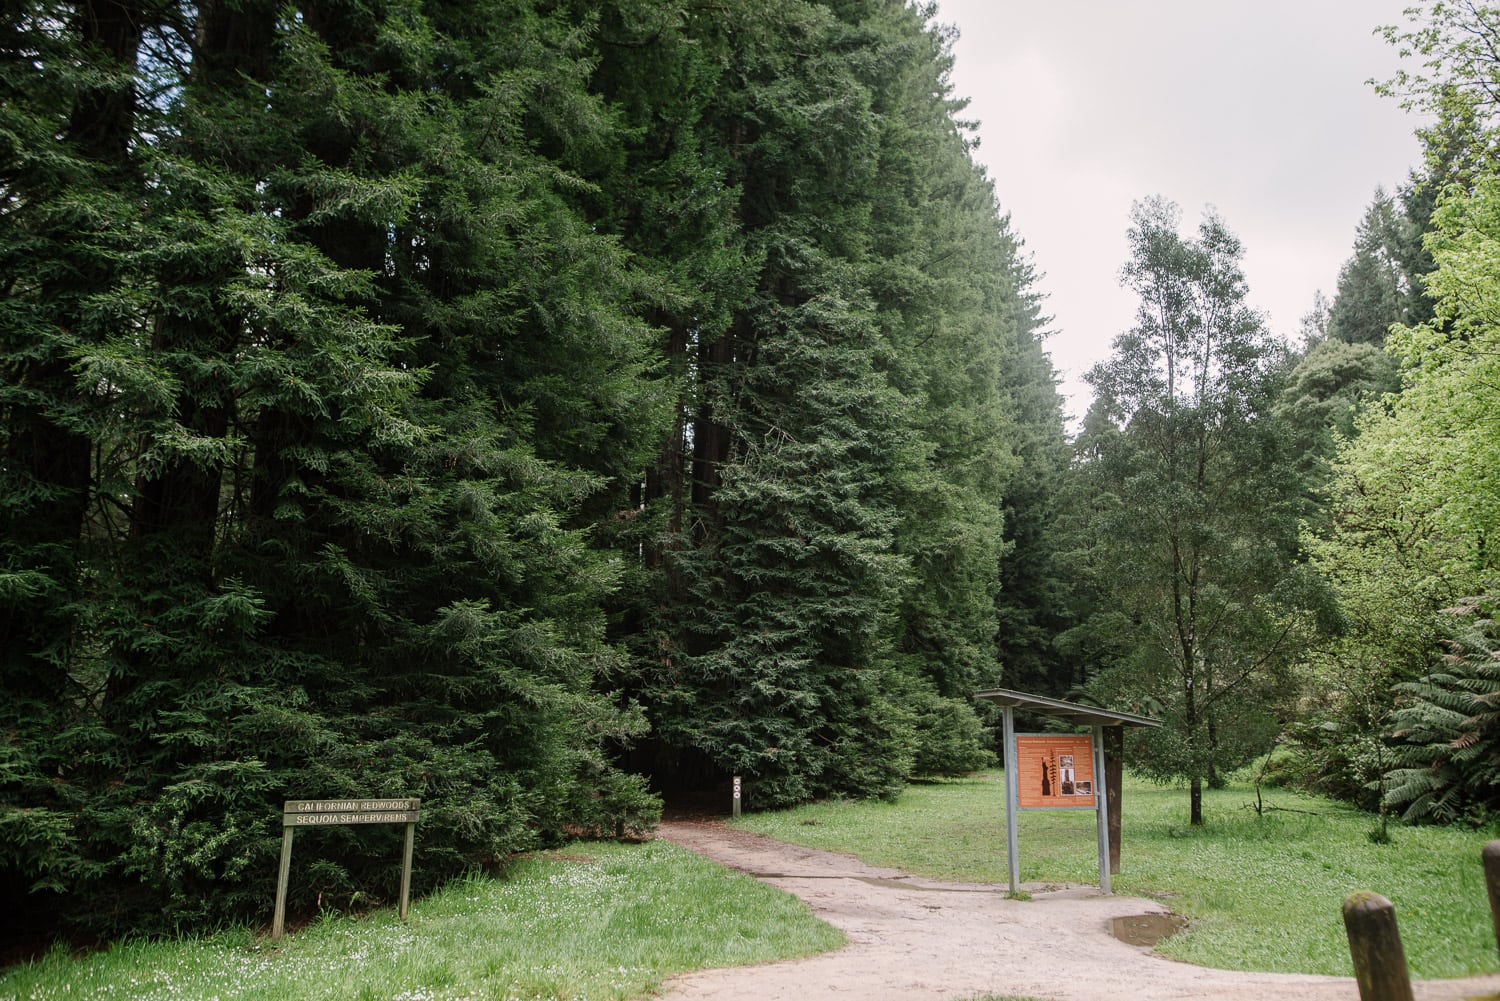 Otways Redwoods plantation